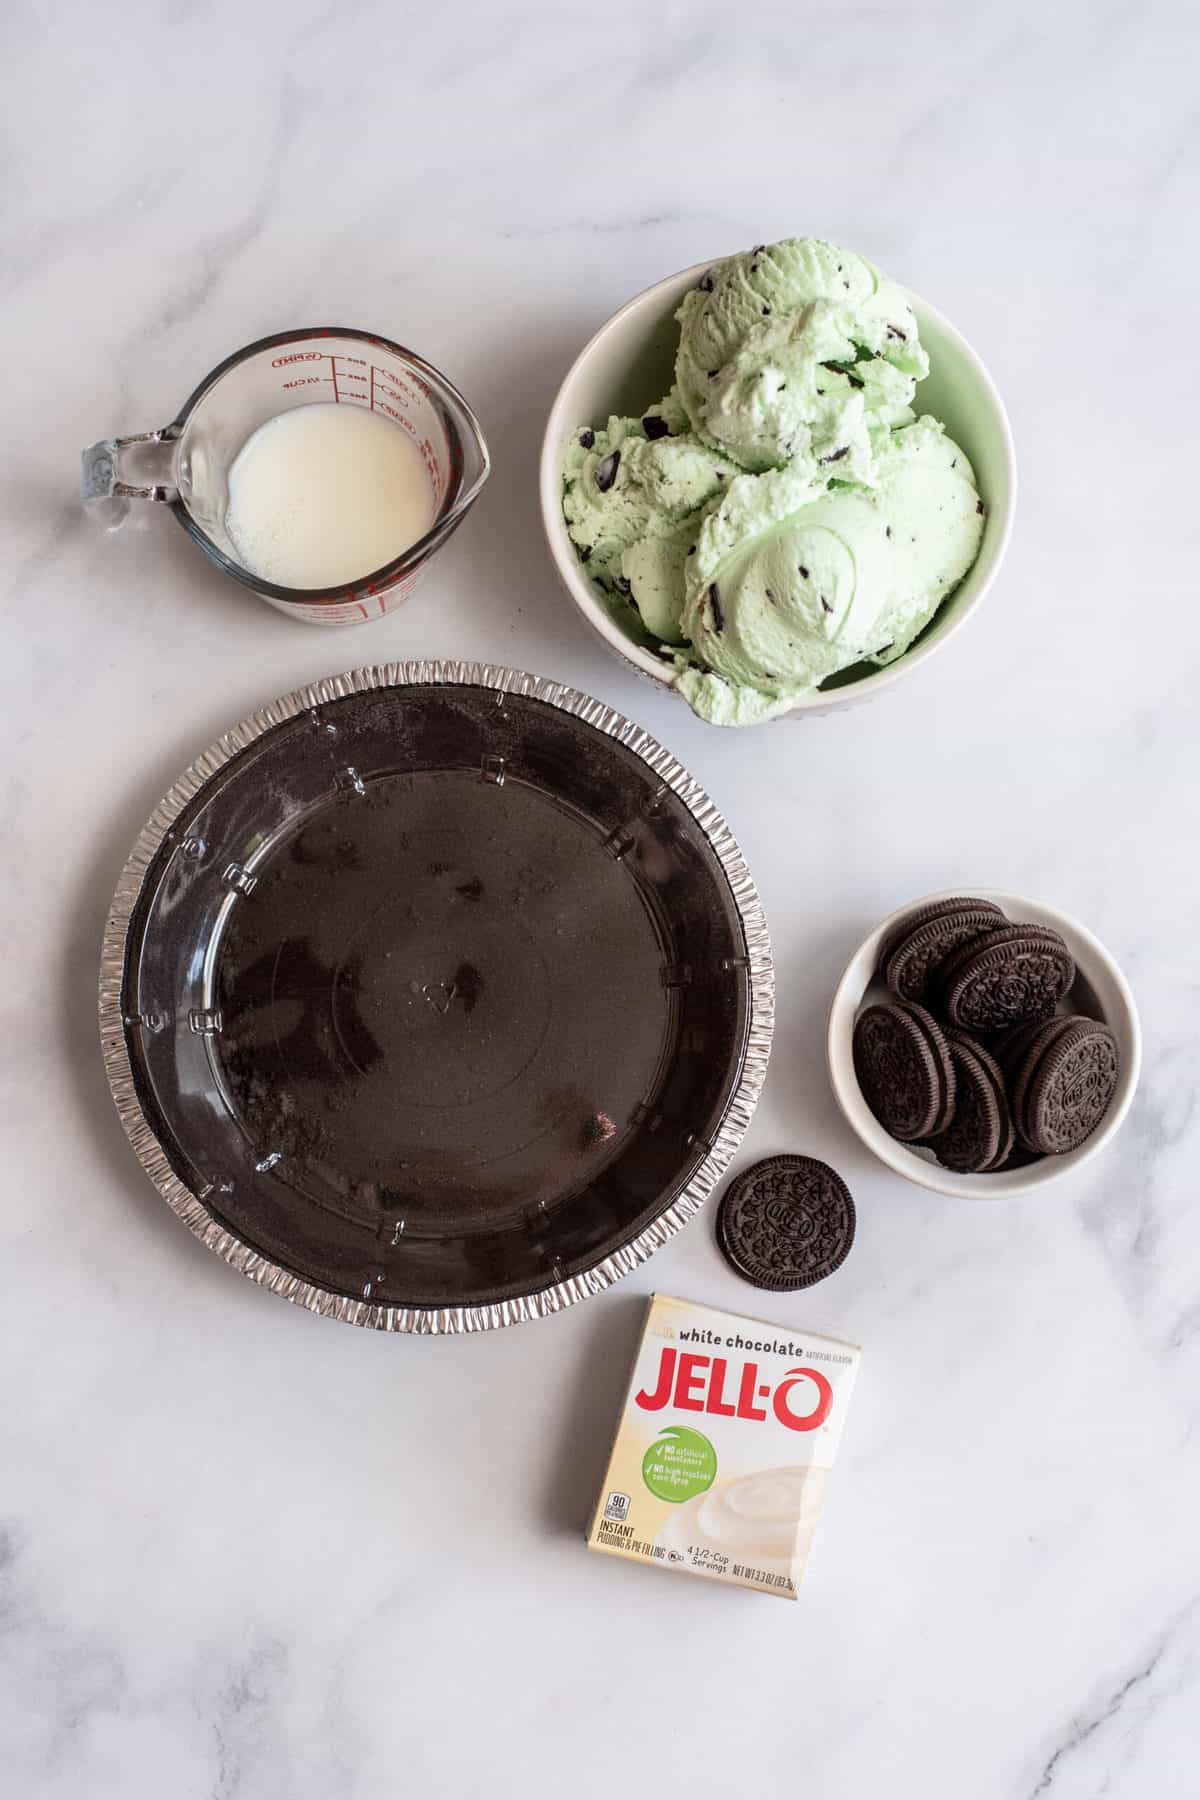 All ingredients used in Mint Oreo Ice Cream Pie Recipe.